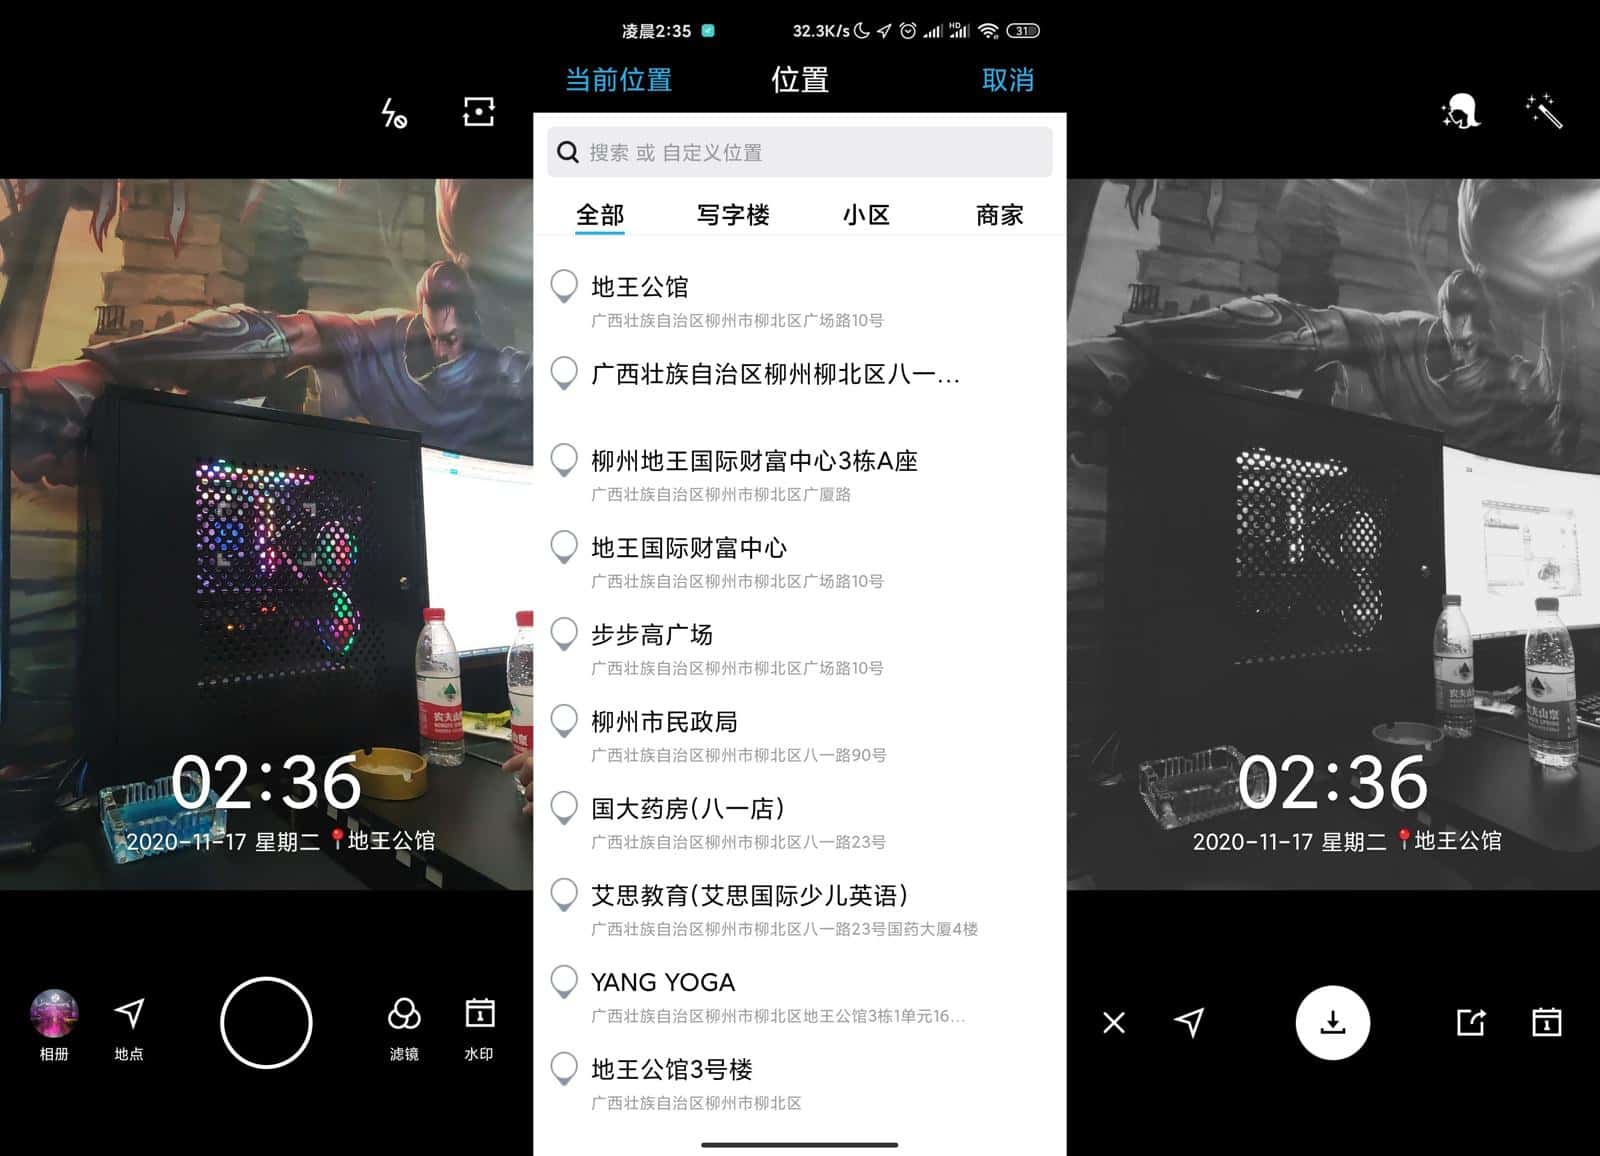 Android 水印相机 v4.0.0.625 去广告纯净版